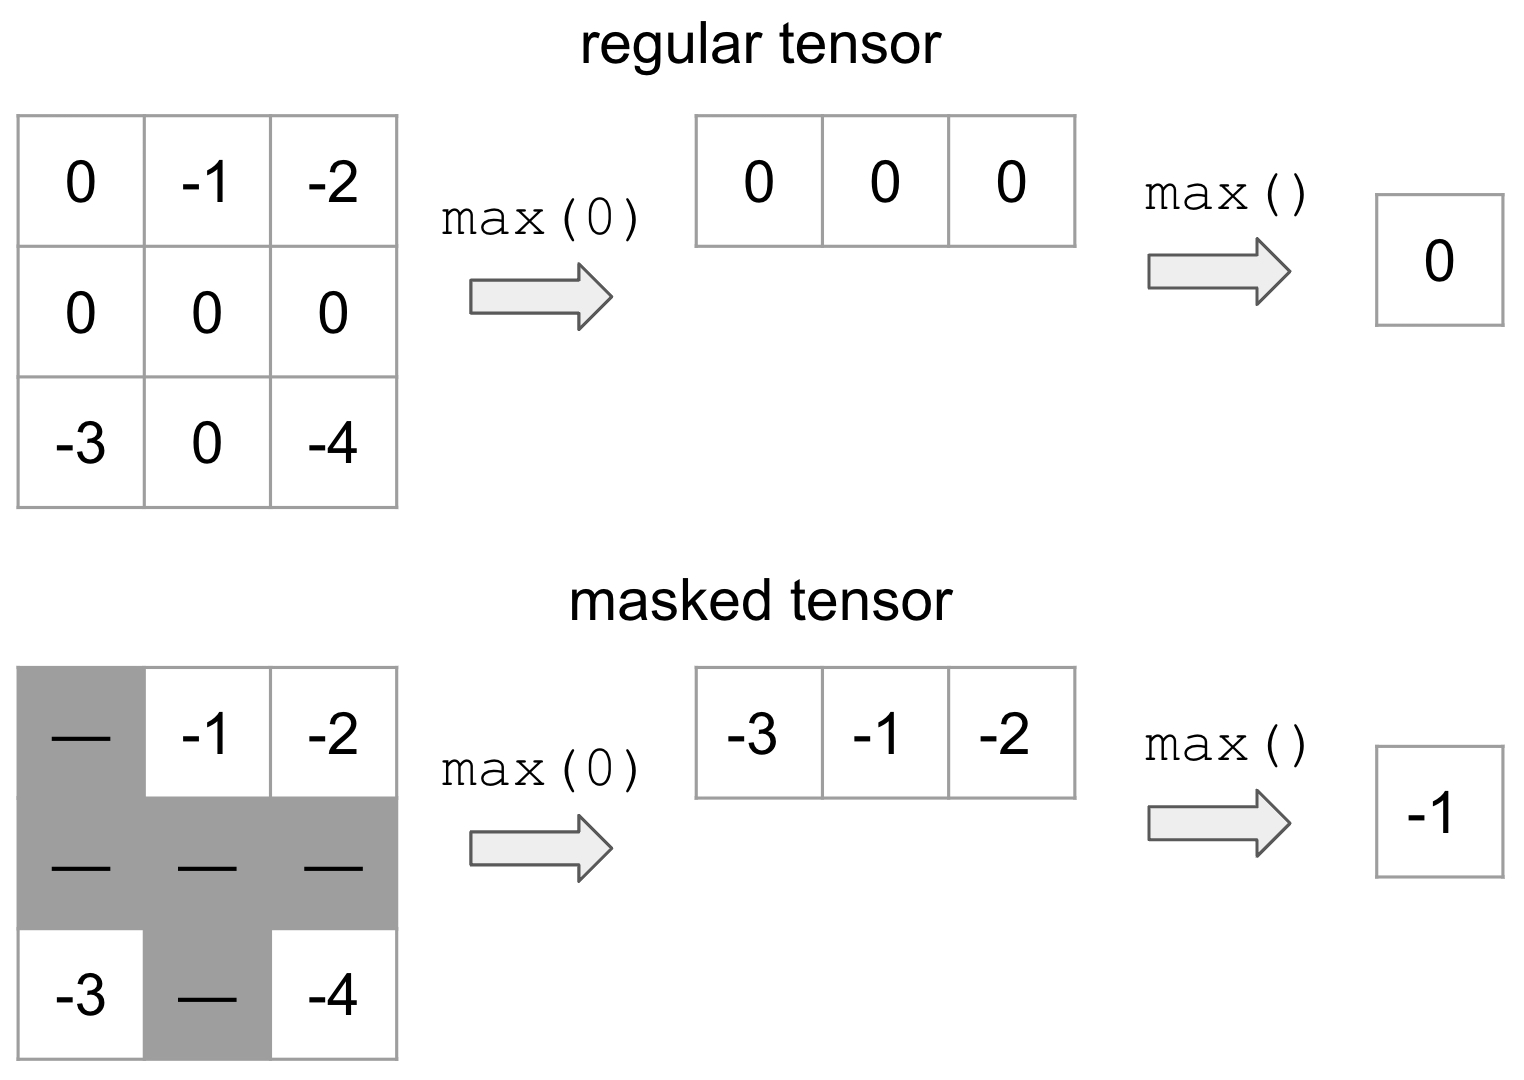 _images/tensor_comparison.jpg